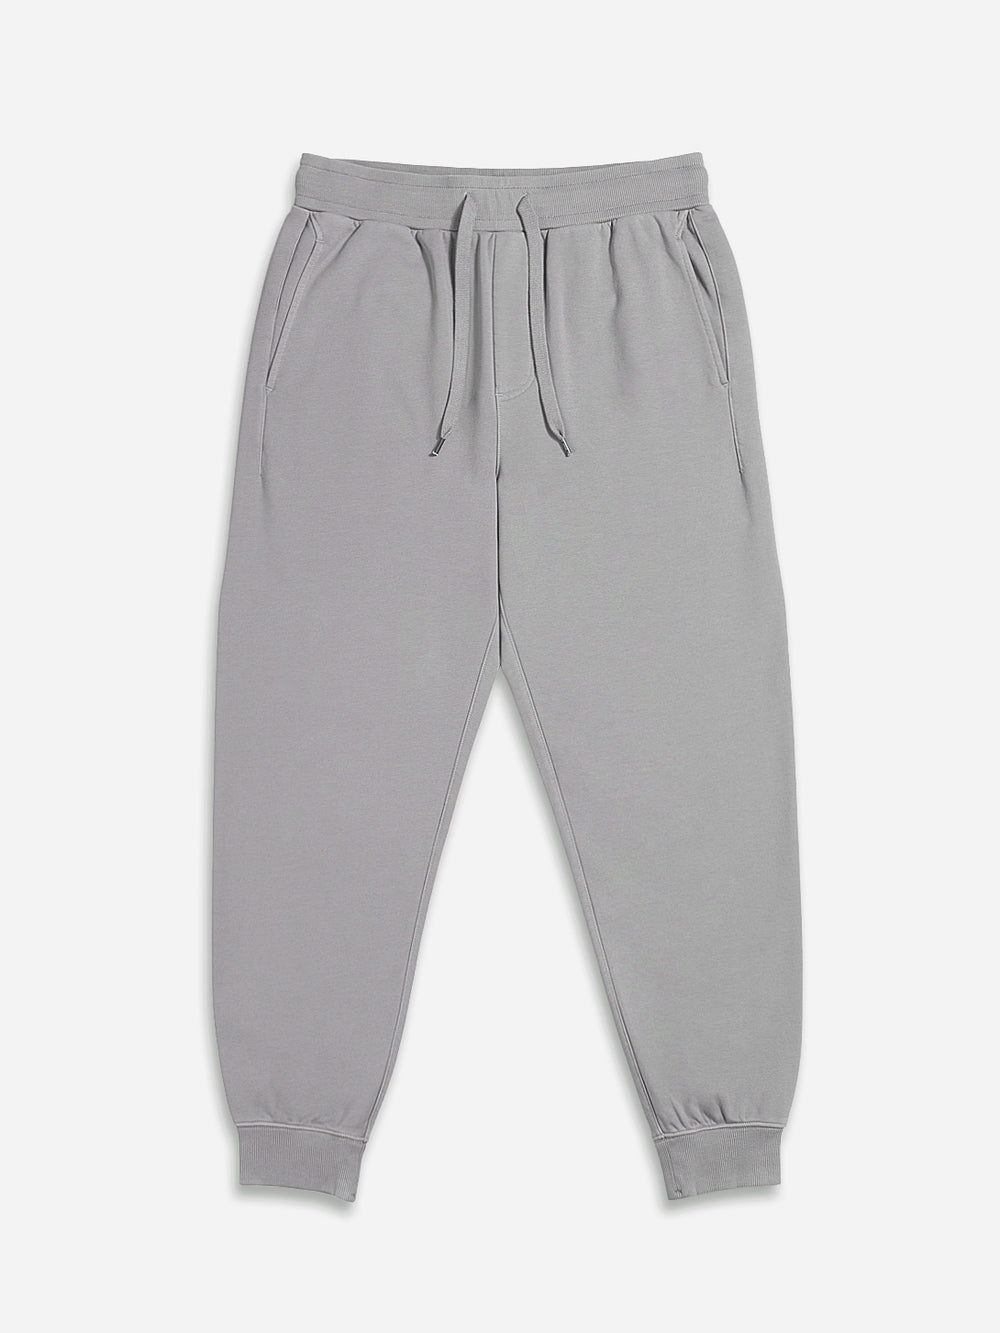 Grey Bklyn Jogger O.N.S Clothing Menswear Joggers Sweatpants SS 22 Spring/Summer 22 NYC